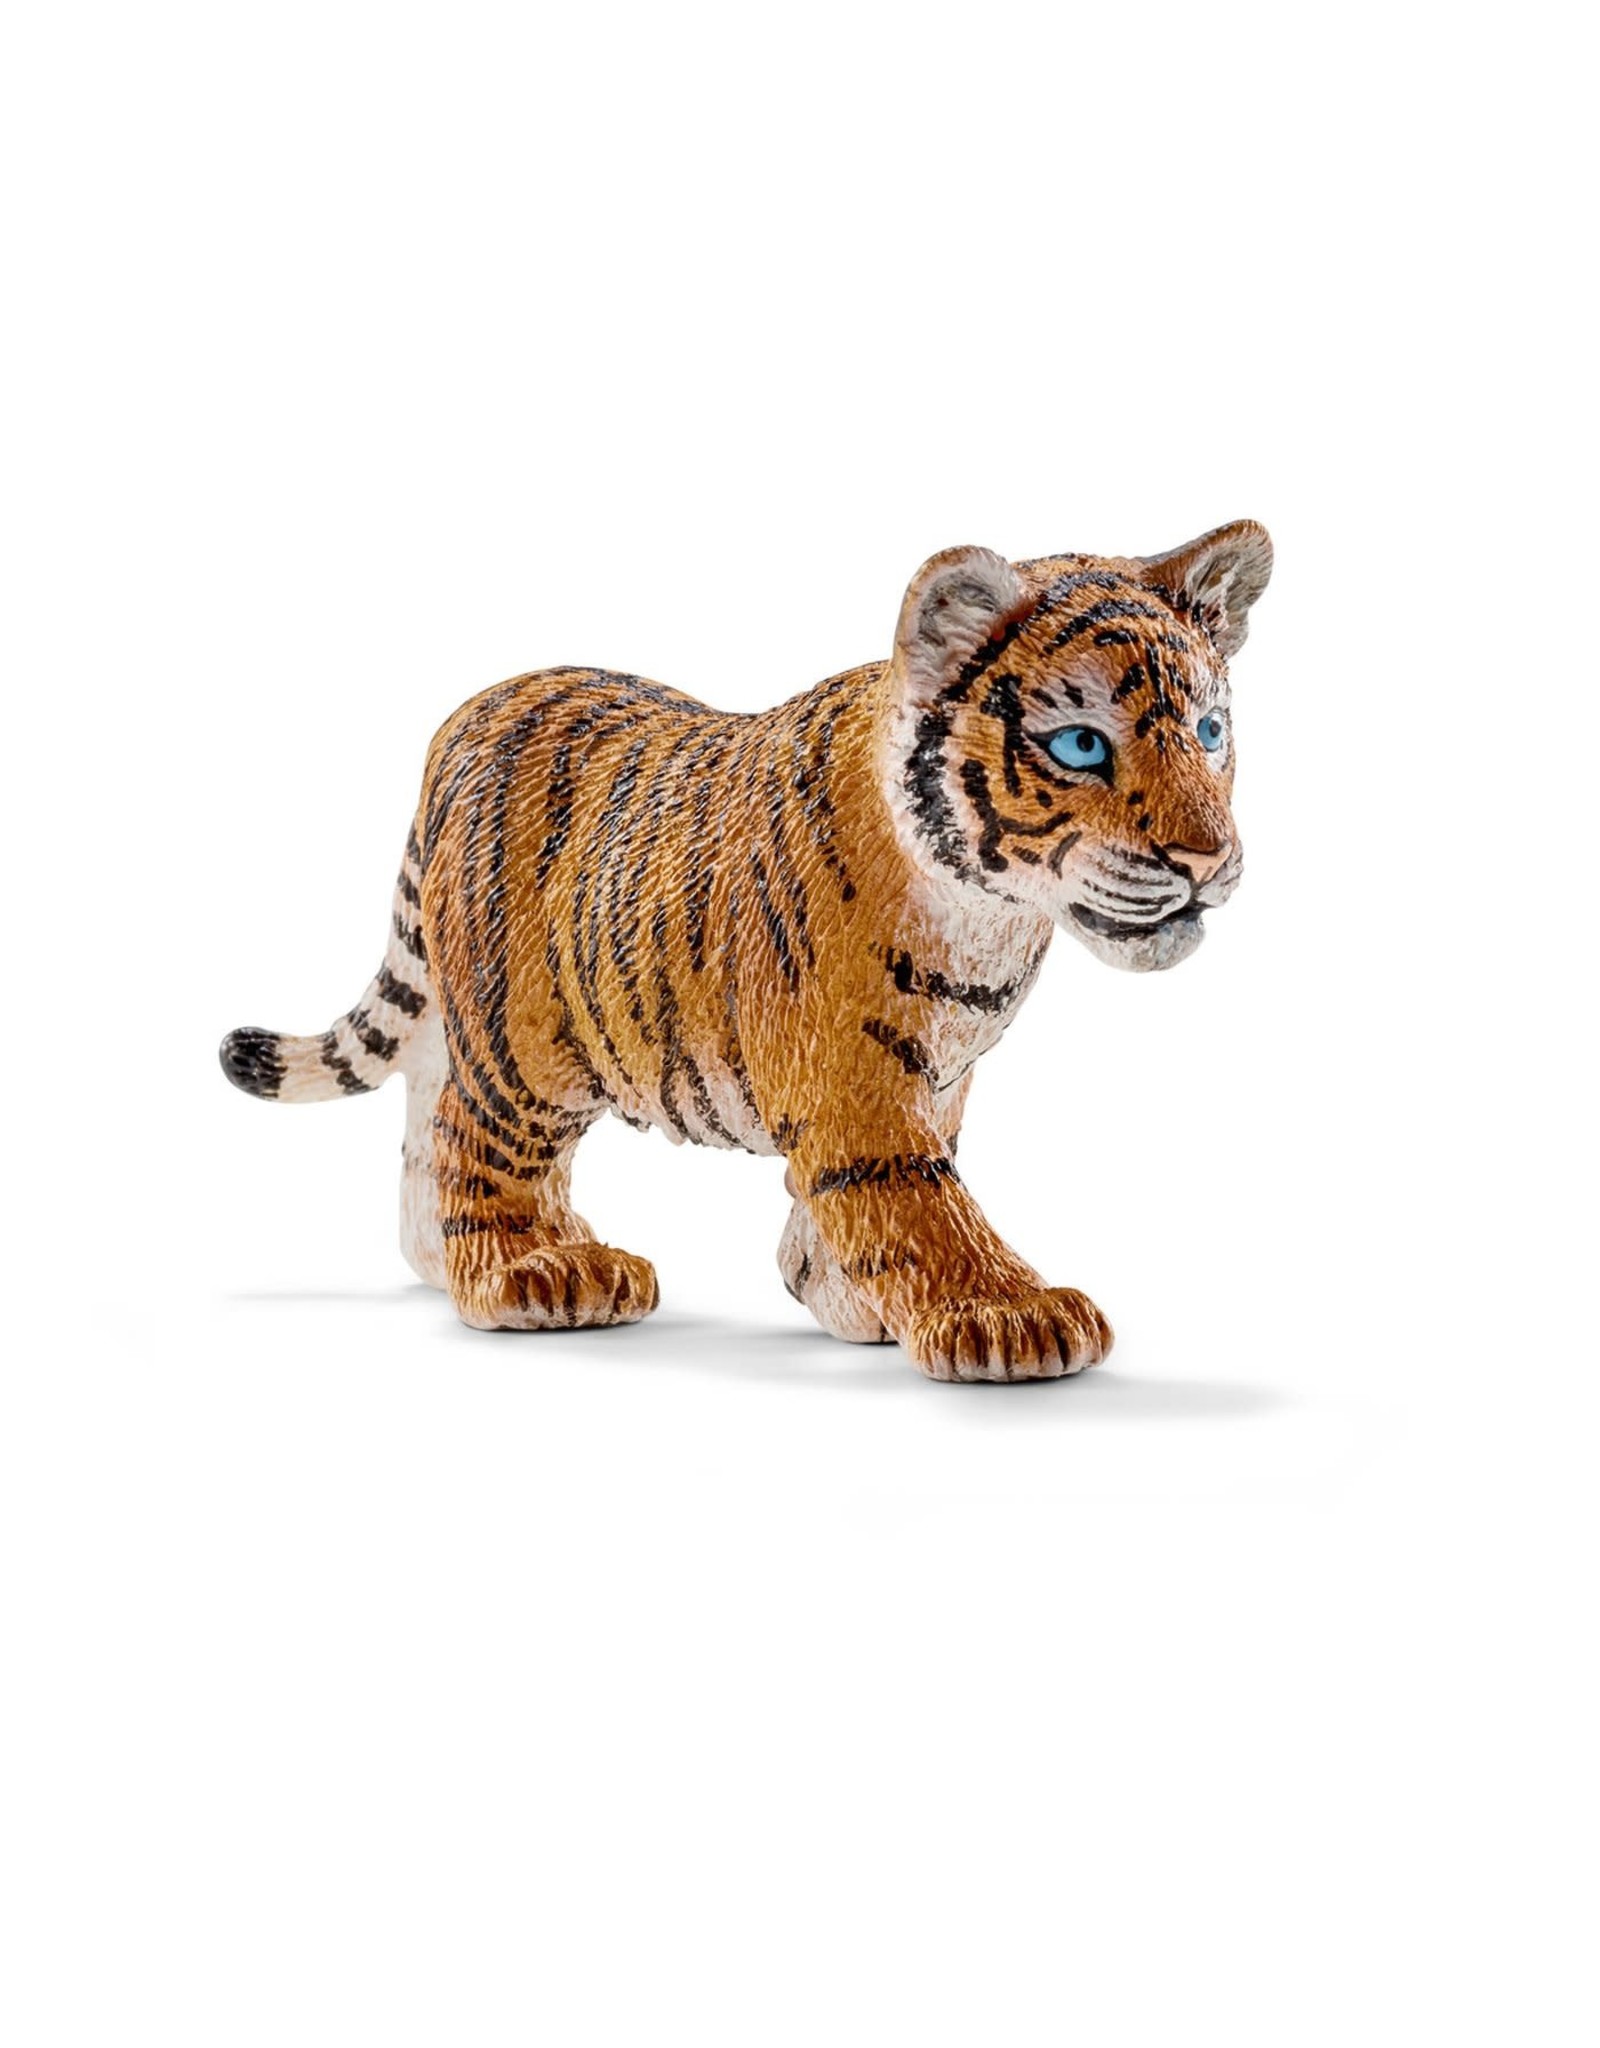 Schleich Tiger Cub